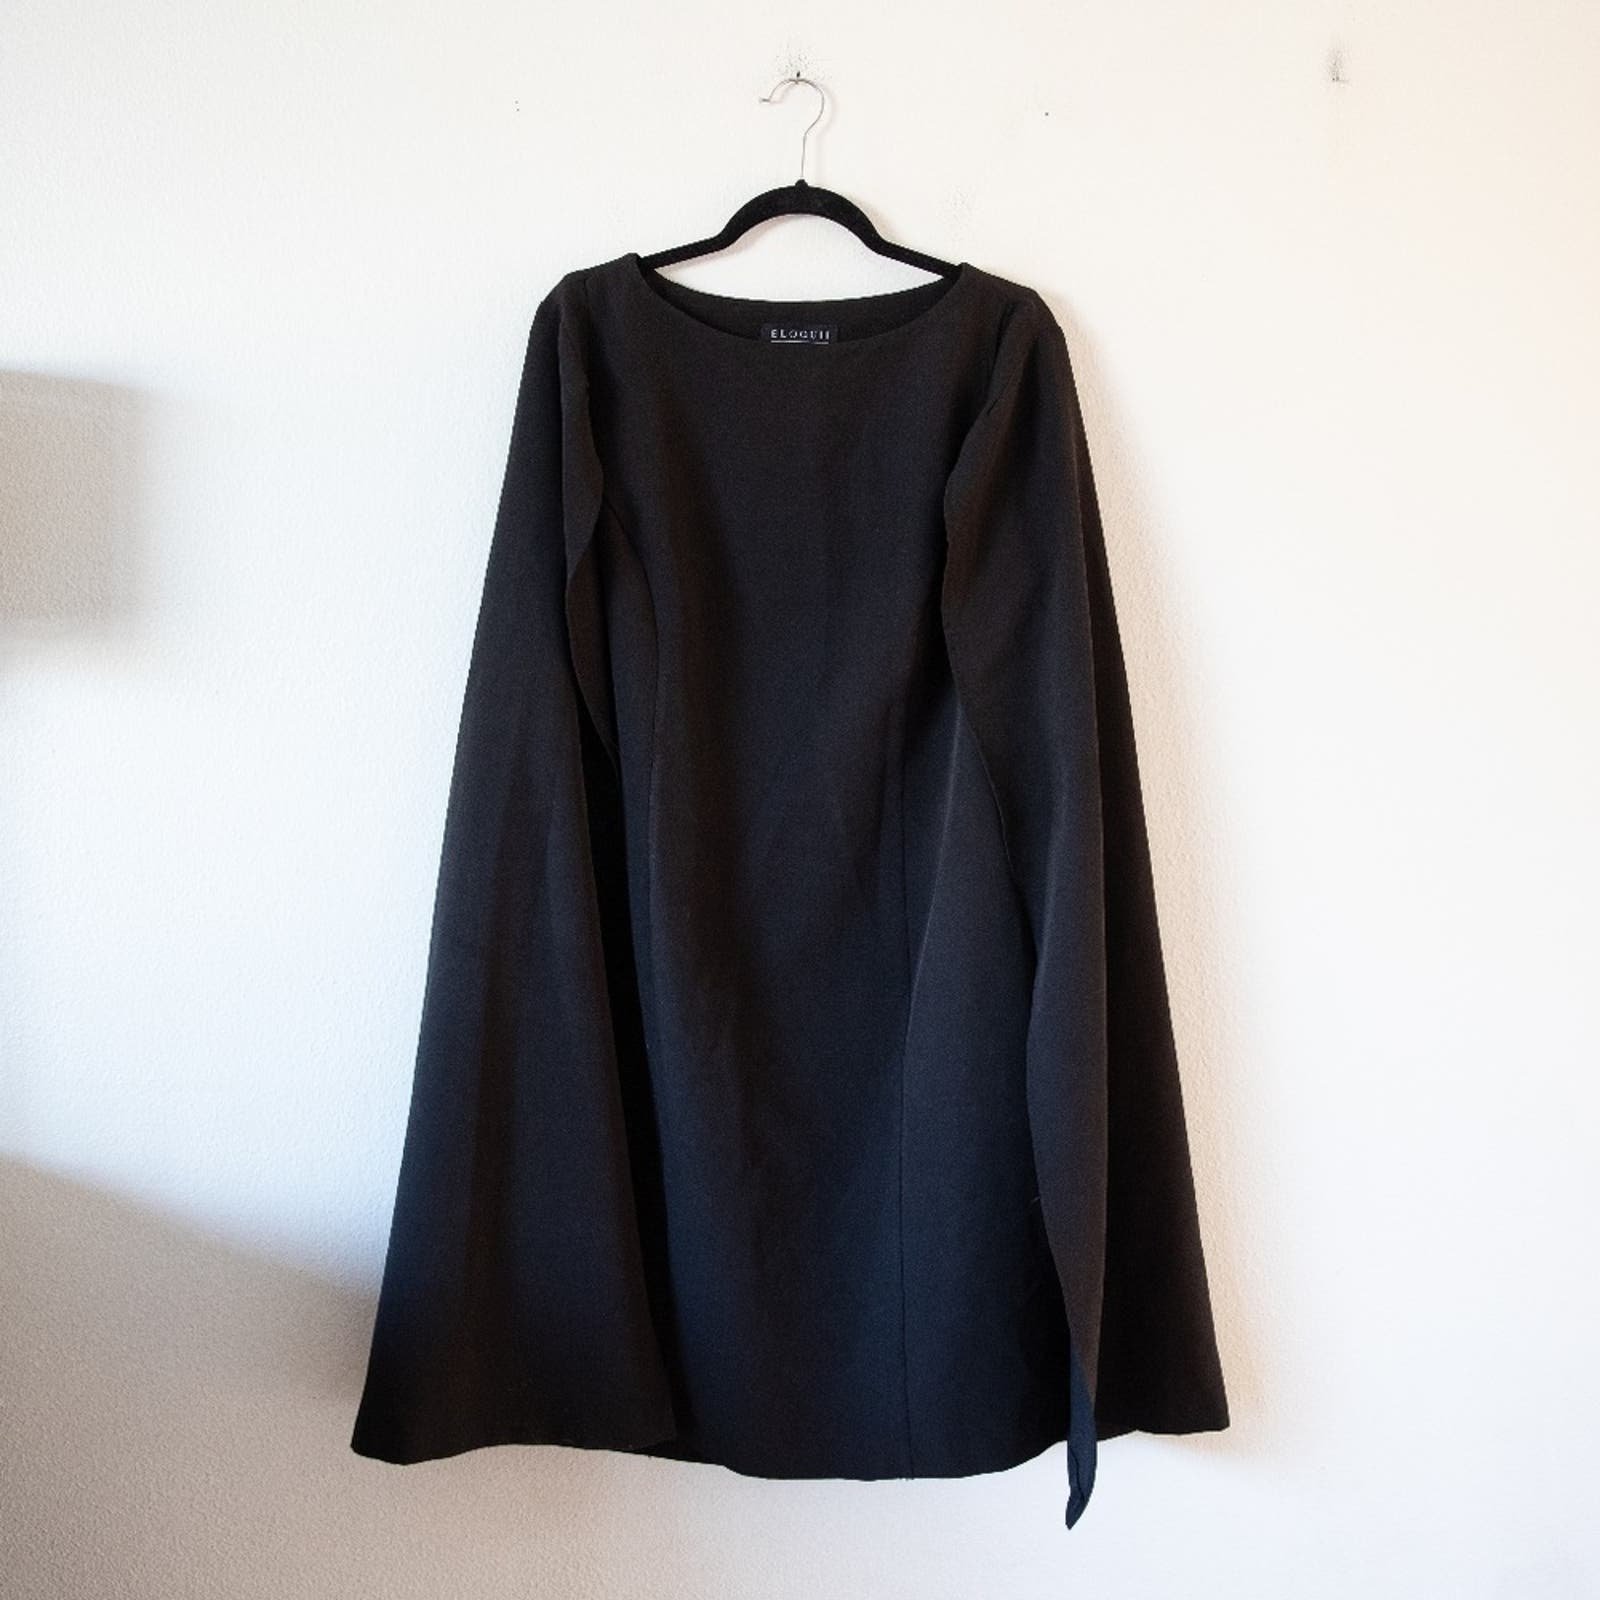 where to buy  Eloquii Black Cape Dress oJy1gK7ub Store Online